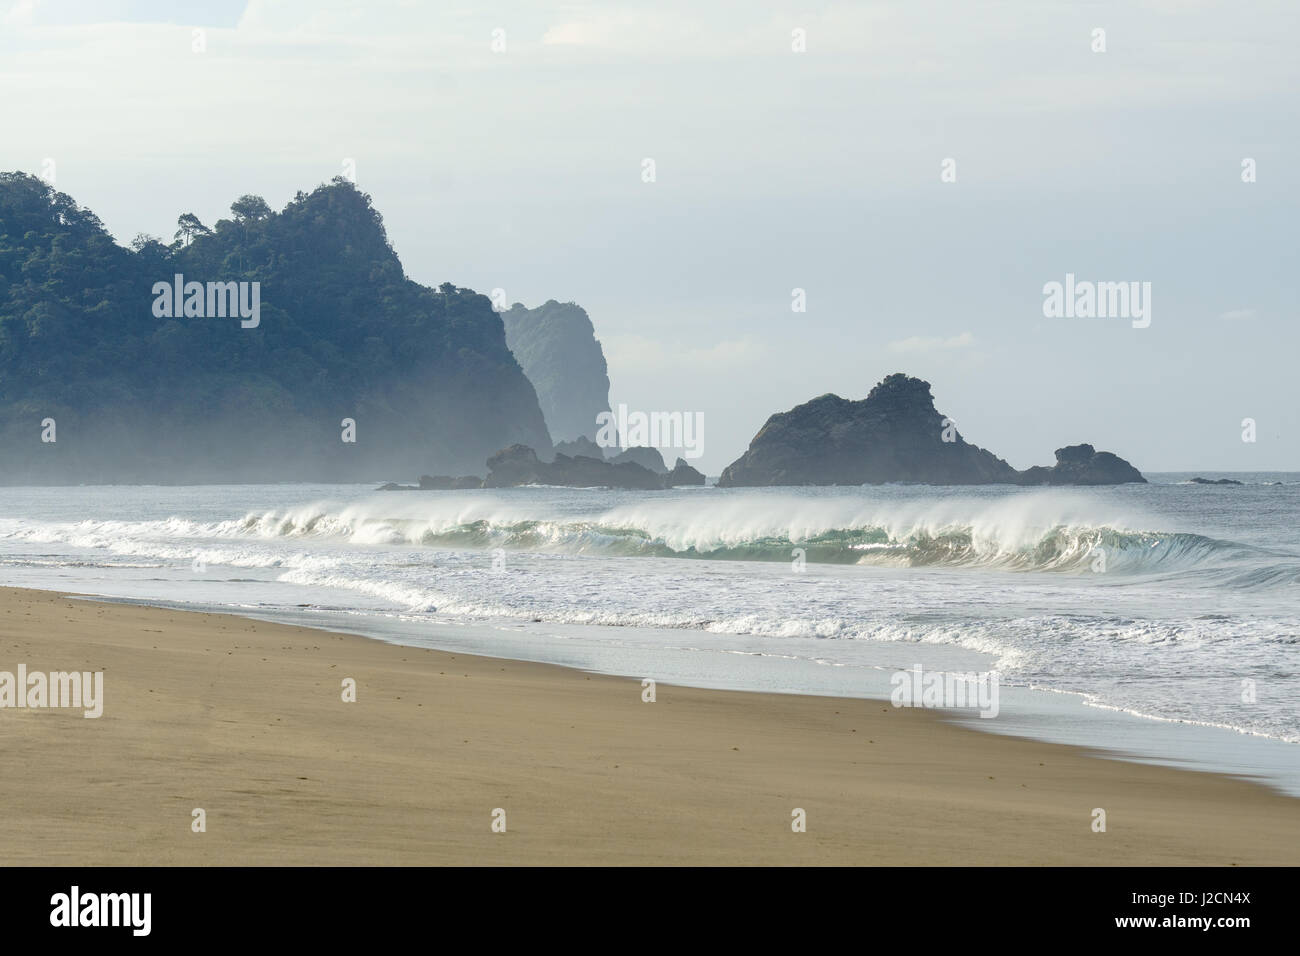 Indonesia, Java Timur, Kabany Banyuwangi, Meru Betiri National Park, waves on the lonely beach Stock Photo